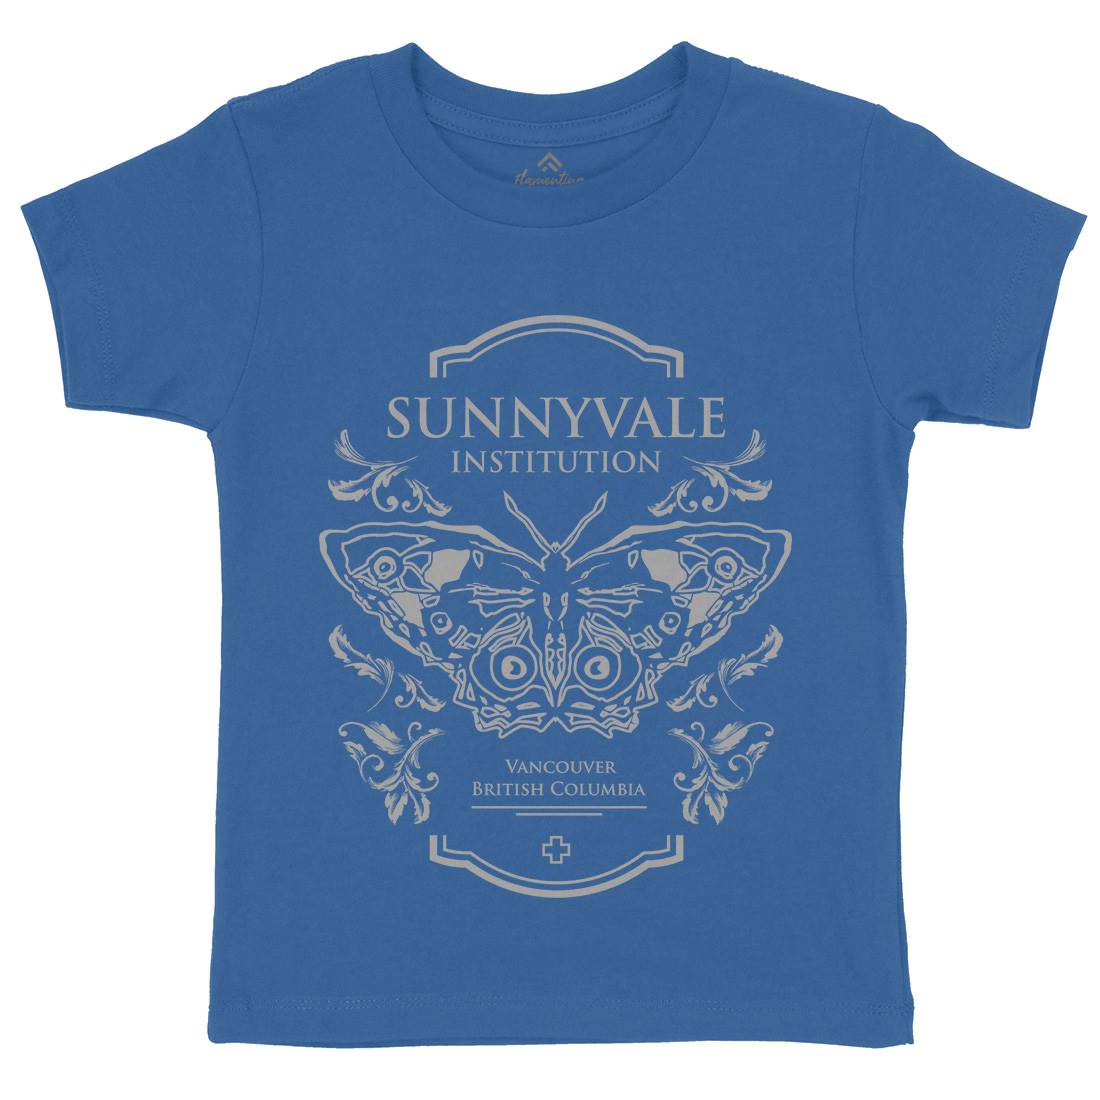 Sunnyvale Institution Kids Crew Neck T-Shirt Space D232